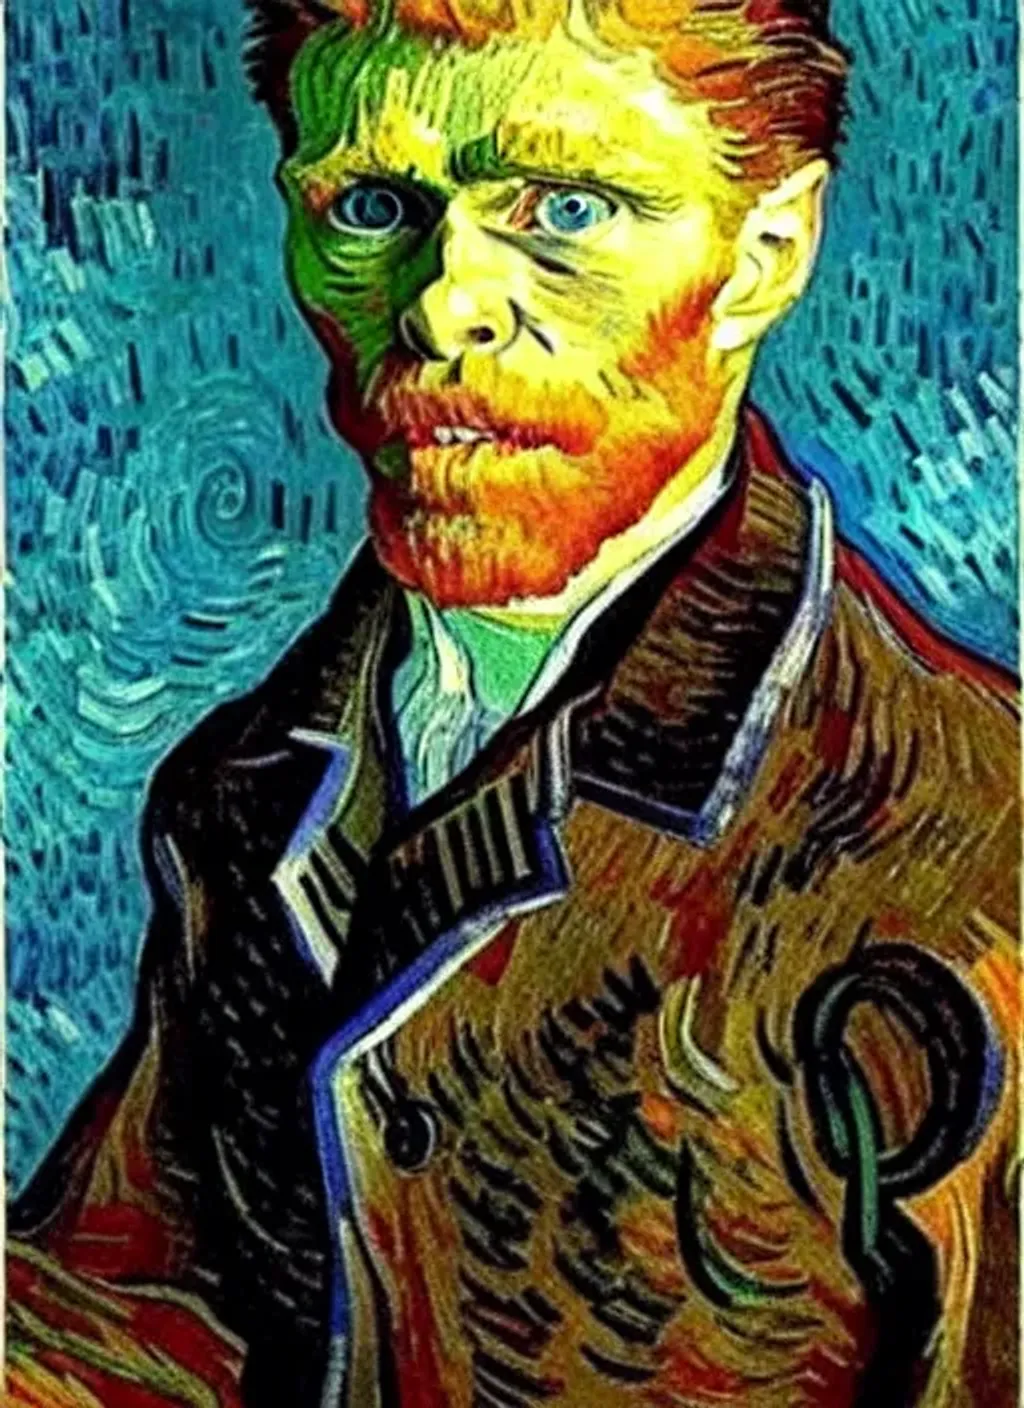 Prompt: Willem Dafoe by Vincent Van Gogh